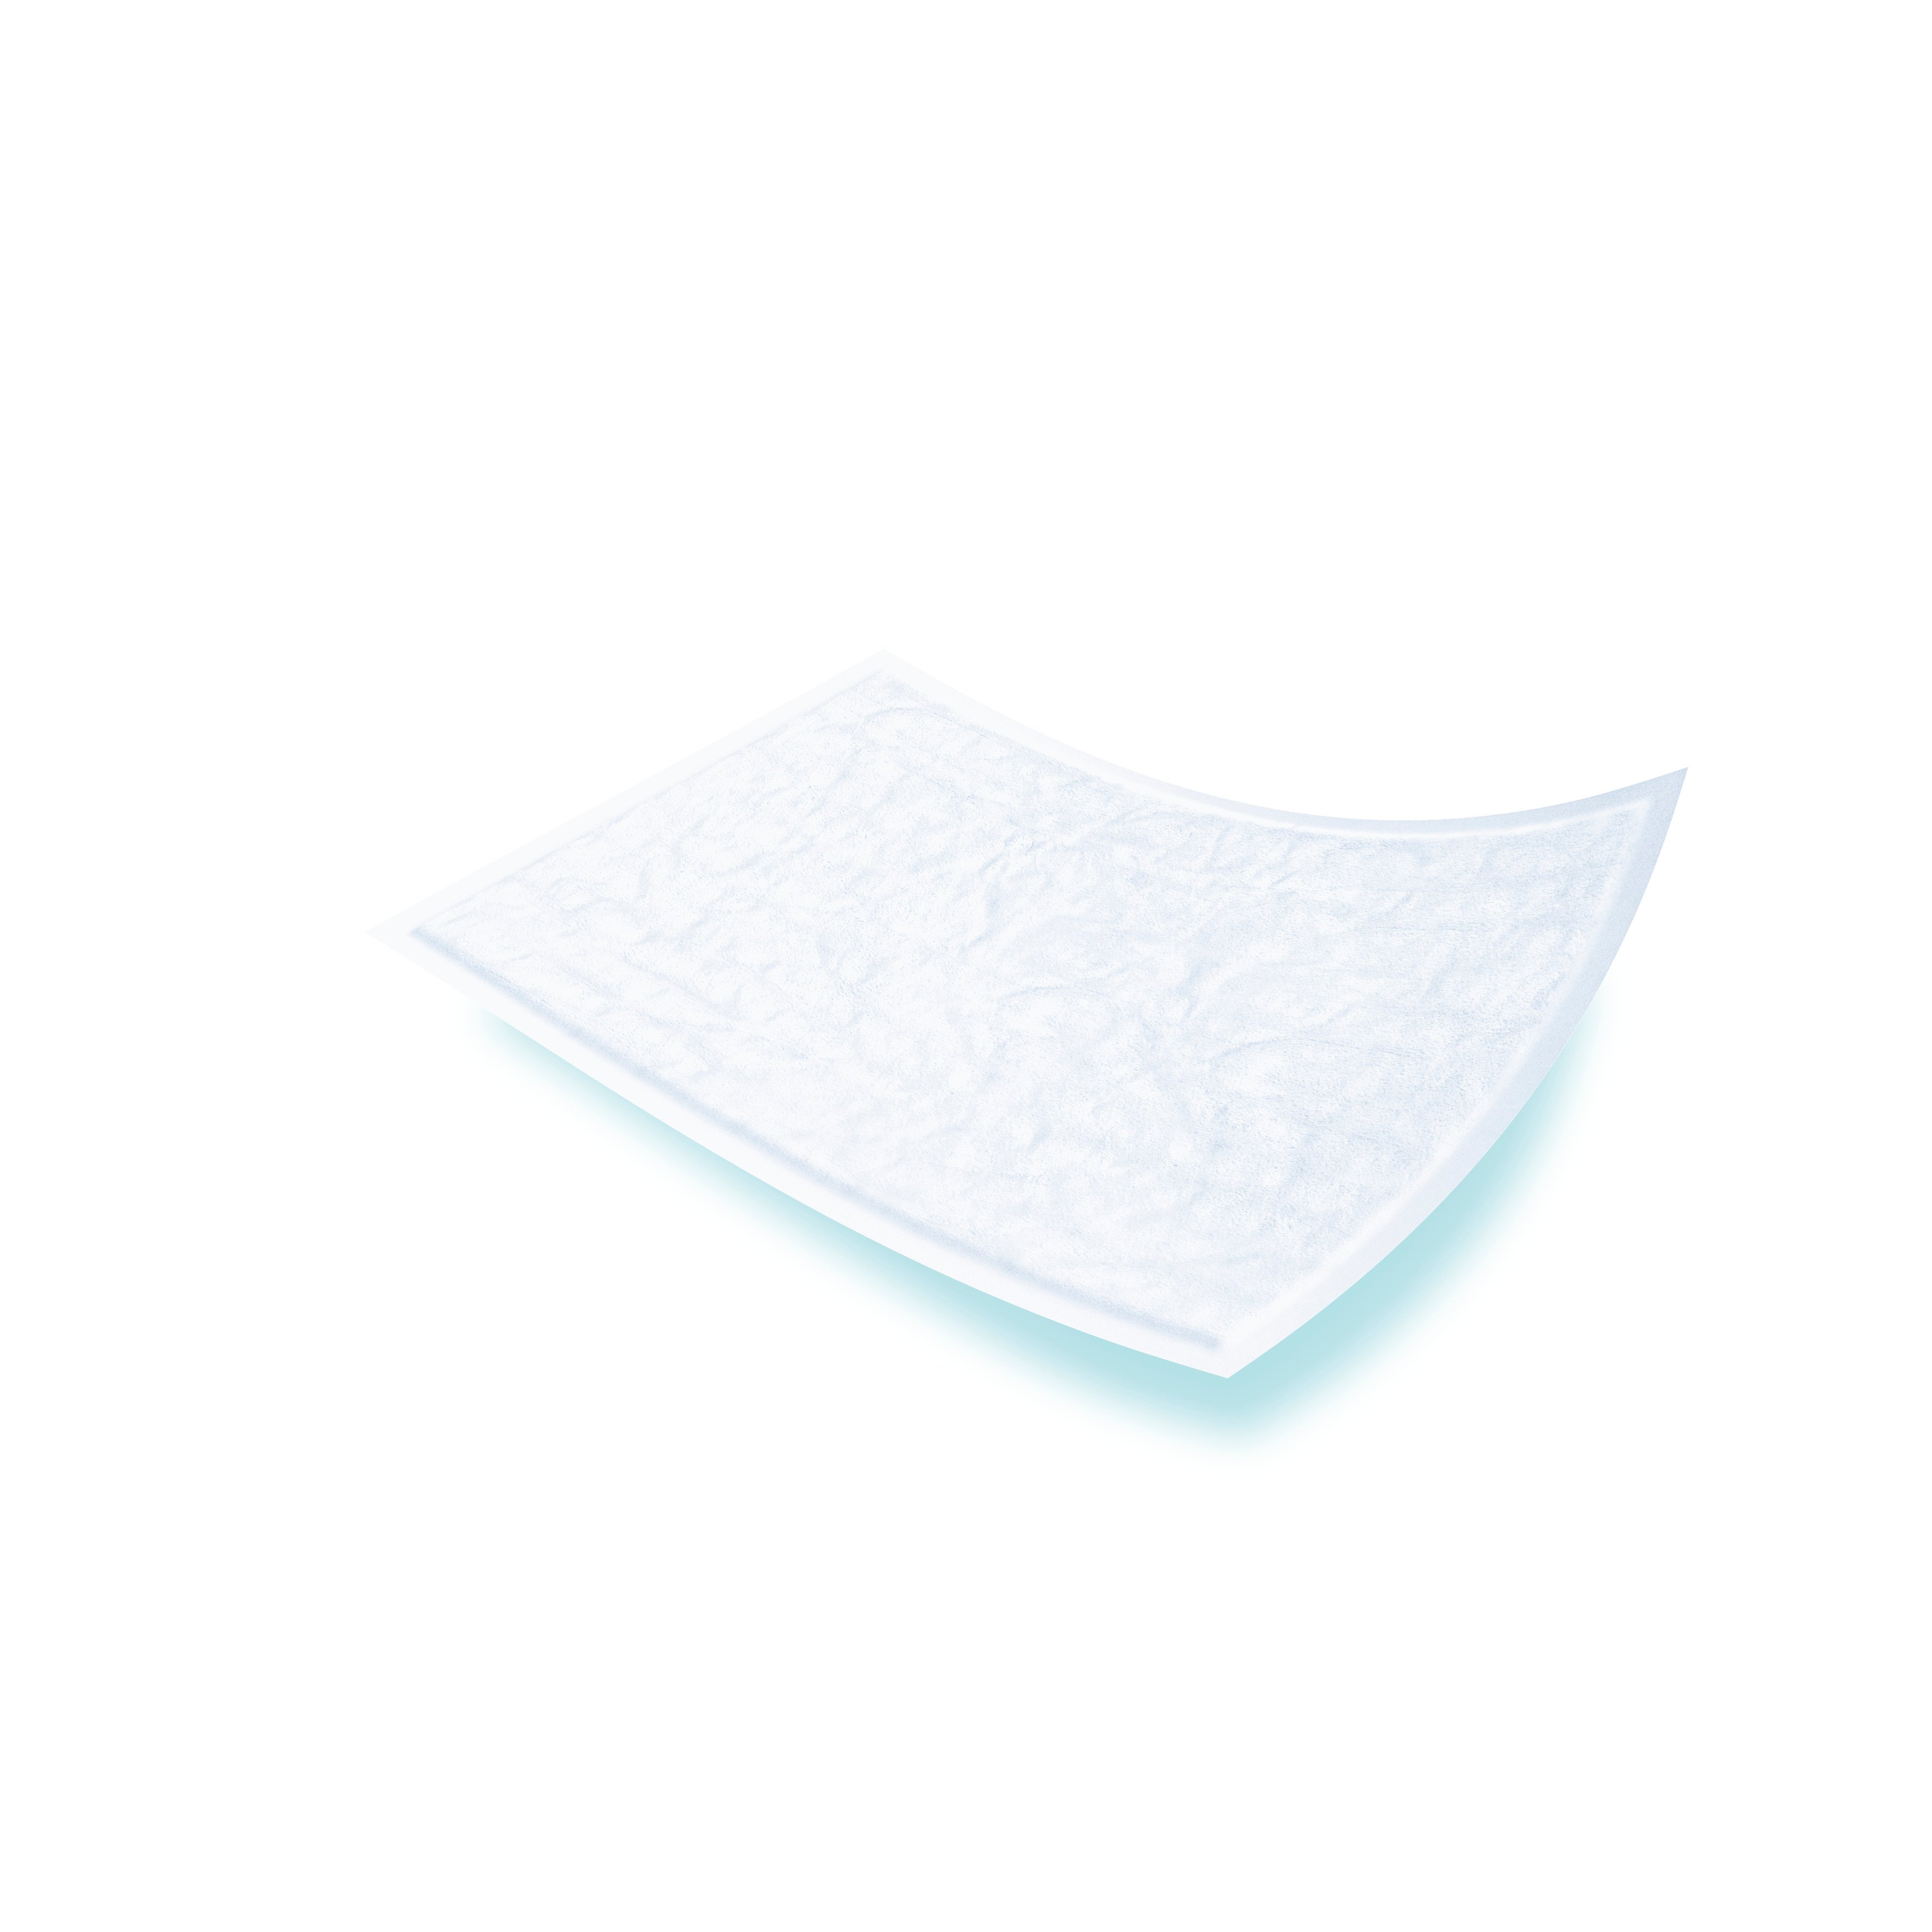 Одноразовые пеленки Tena Bed Normal, 60x60 см, 30 шт. - фото 3